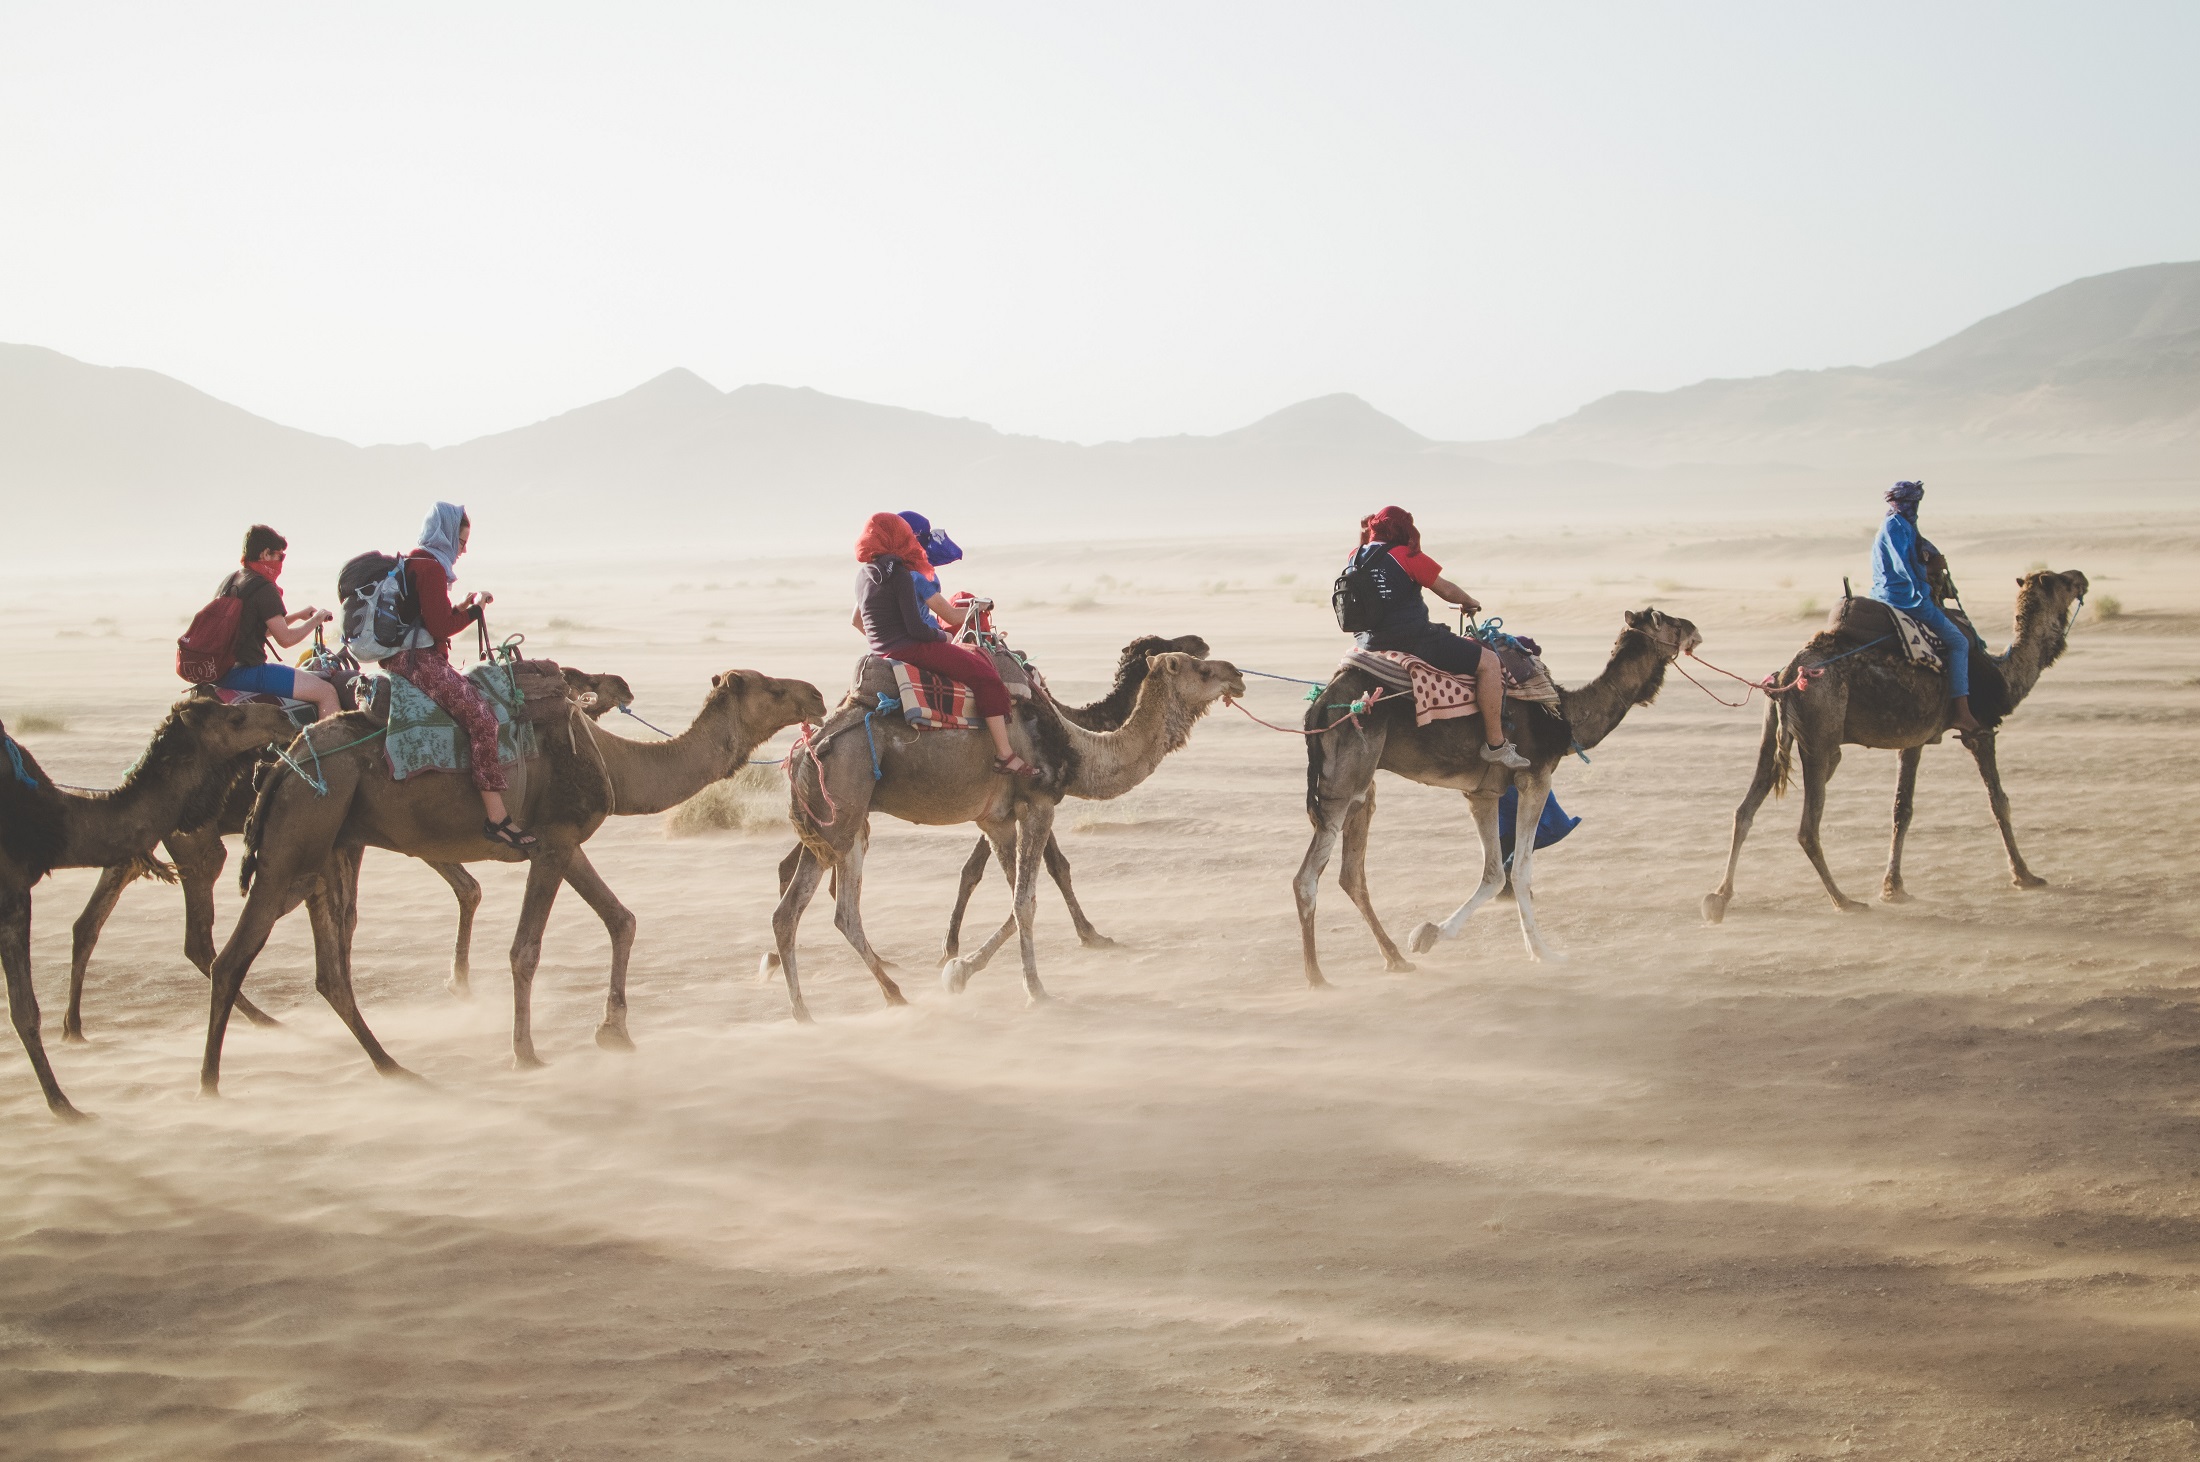 Sahara_Desert_Camel_Tour_Marrakech_Morocco_Redcliffe_Cruise_Travel_agent_over_50s_holidays